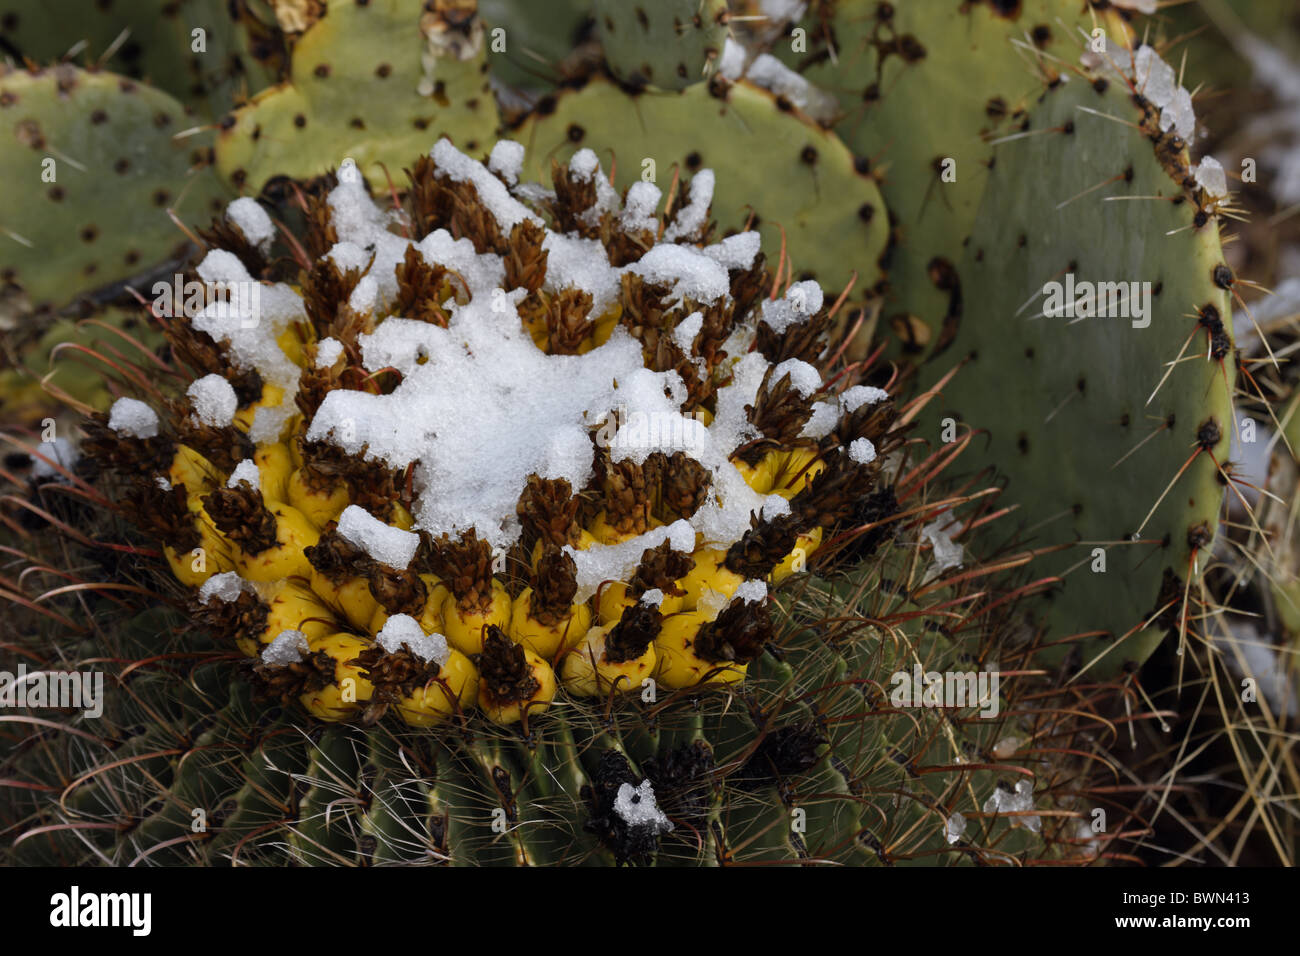 Fishhook Barrel Cactus with fruit in snow (Ferocactus wislizeni